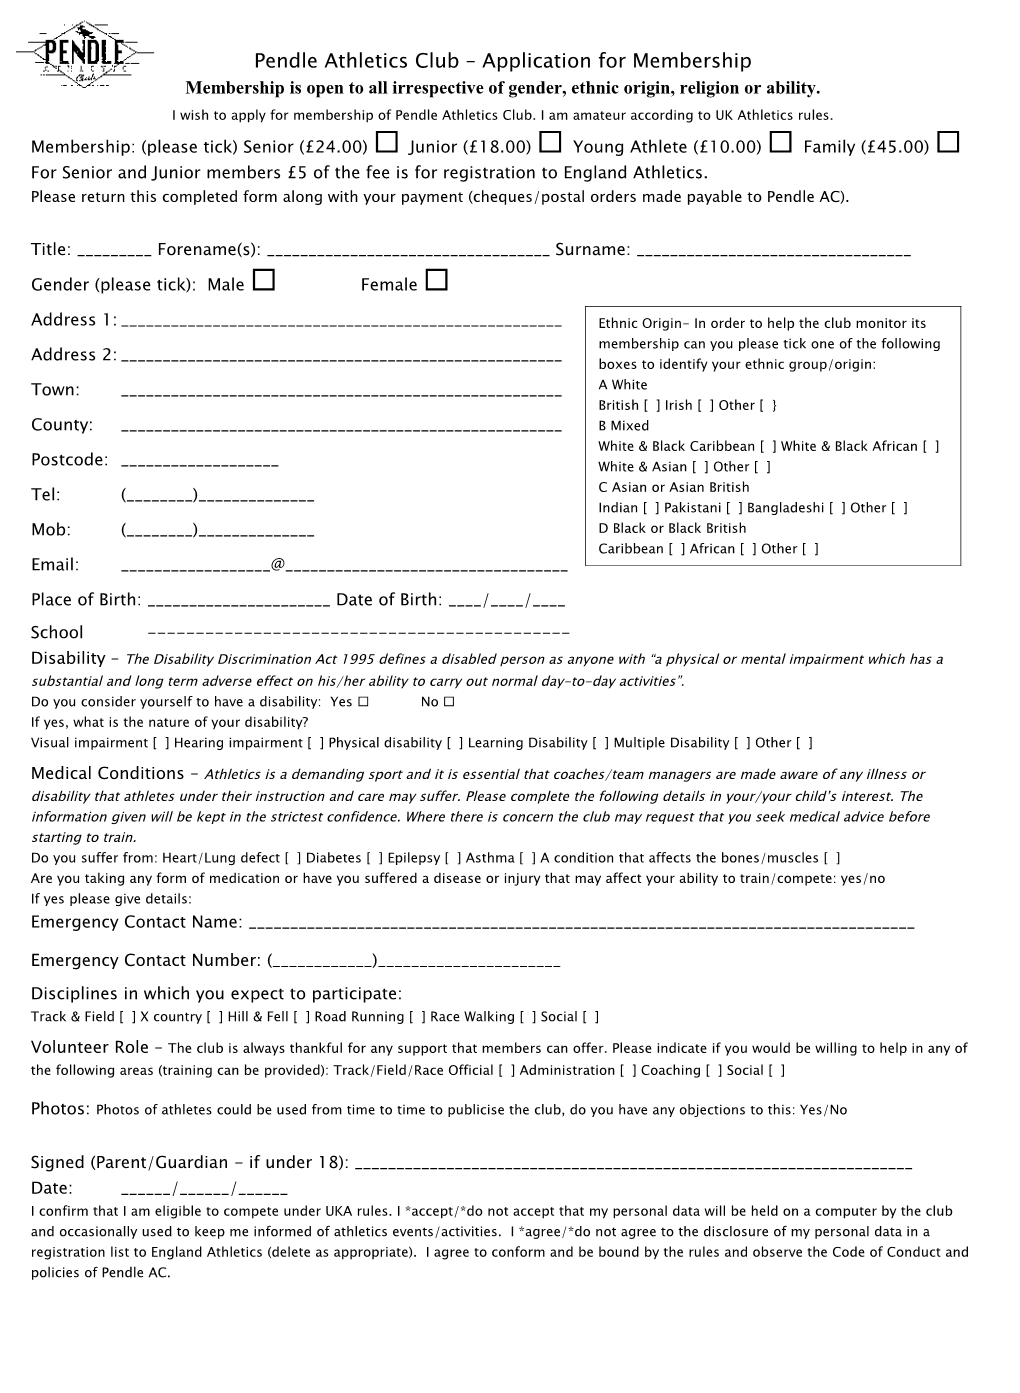 Pendle Athletics Club Application for Membership